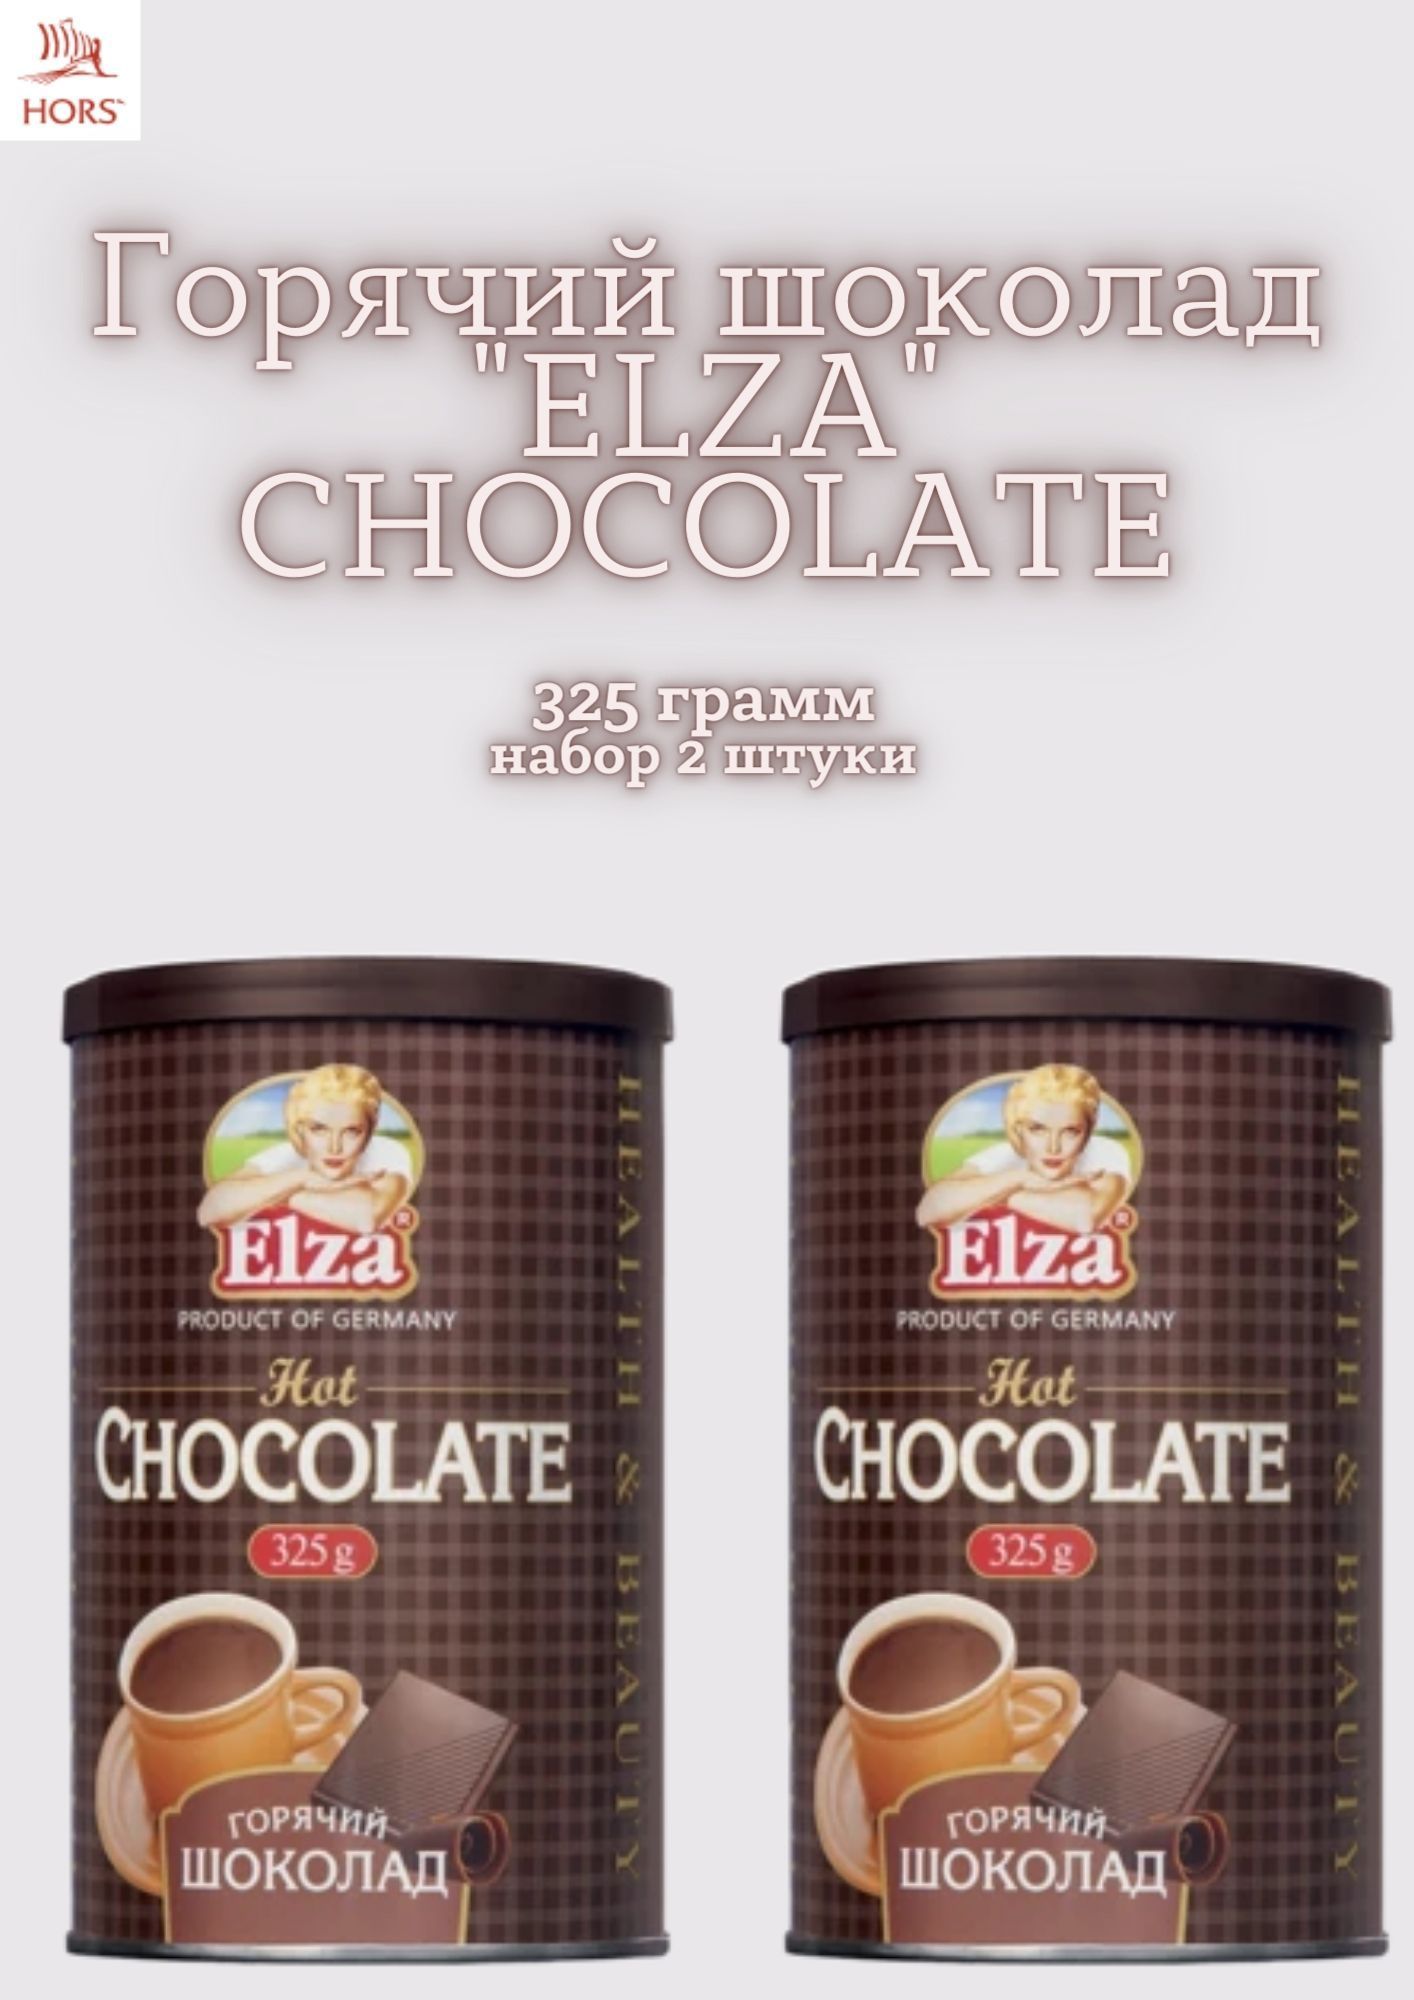 Горячий шоколад Elza горячий шоколад растворимый, 325 г, Германия. Горячий шоколад Elza, 325 гр.